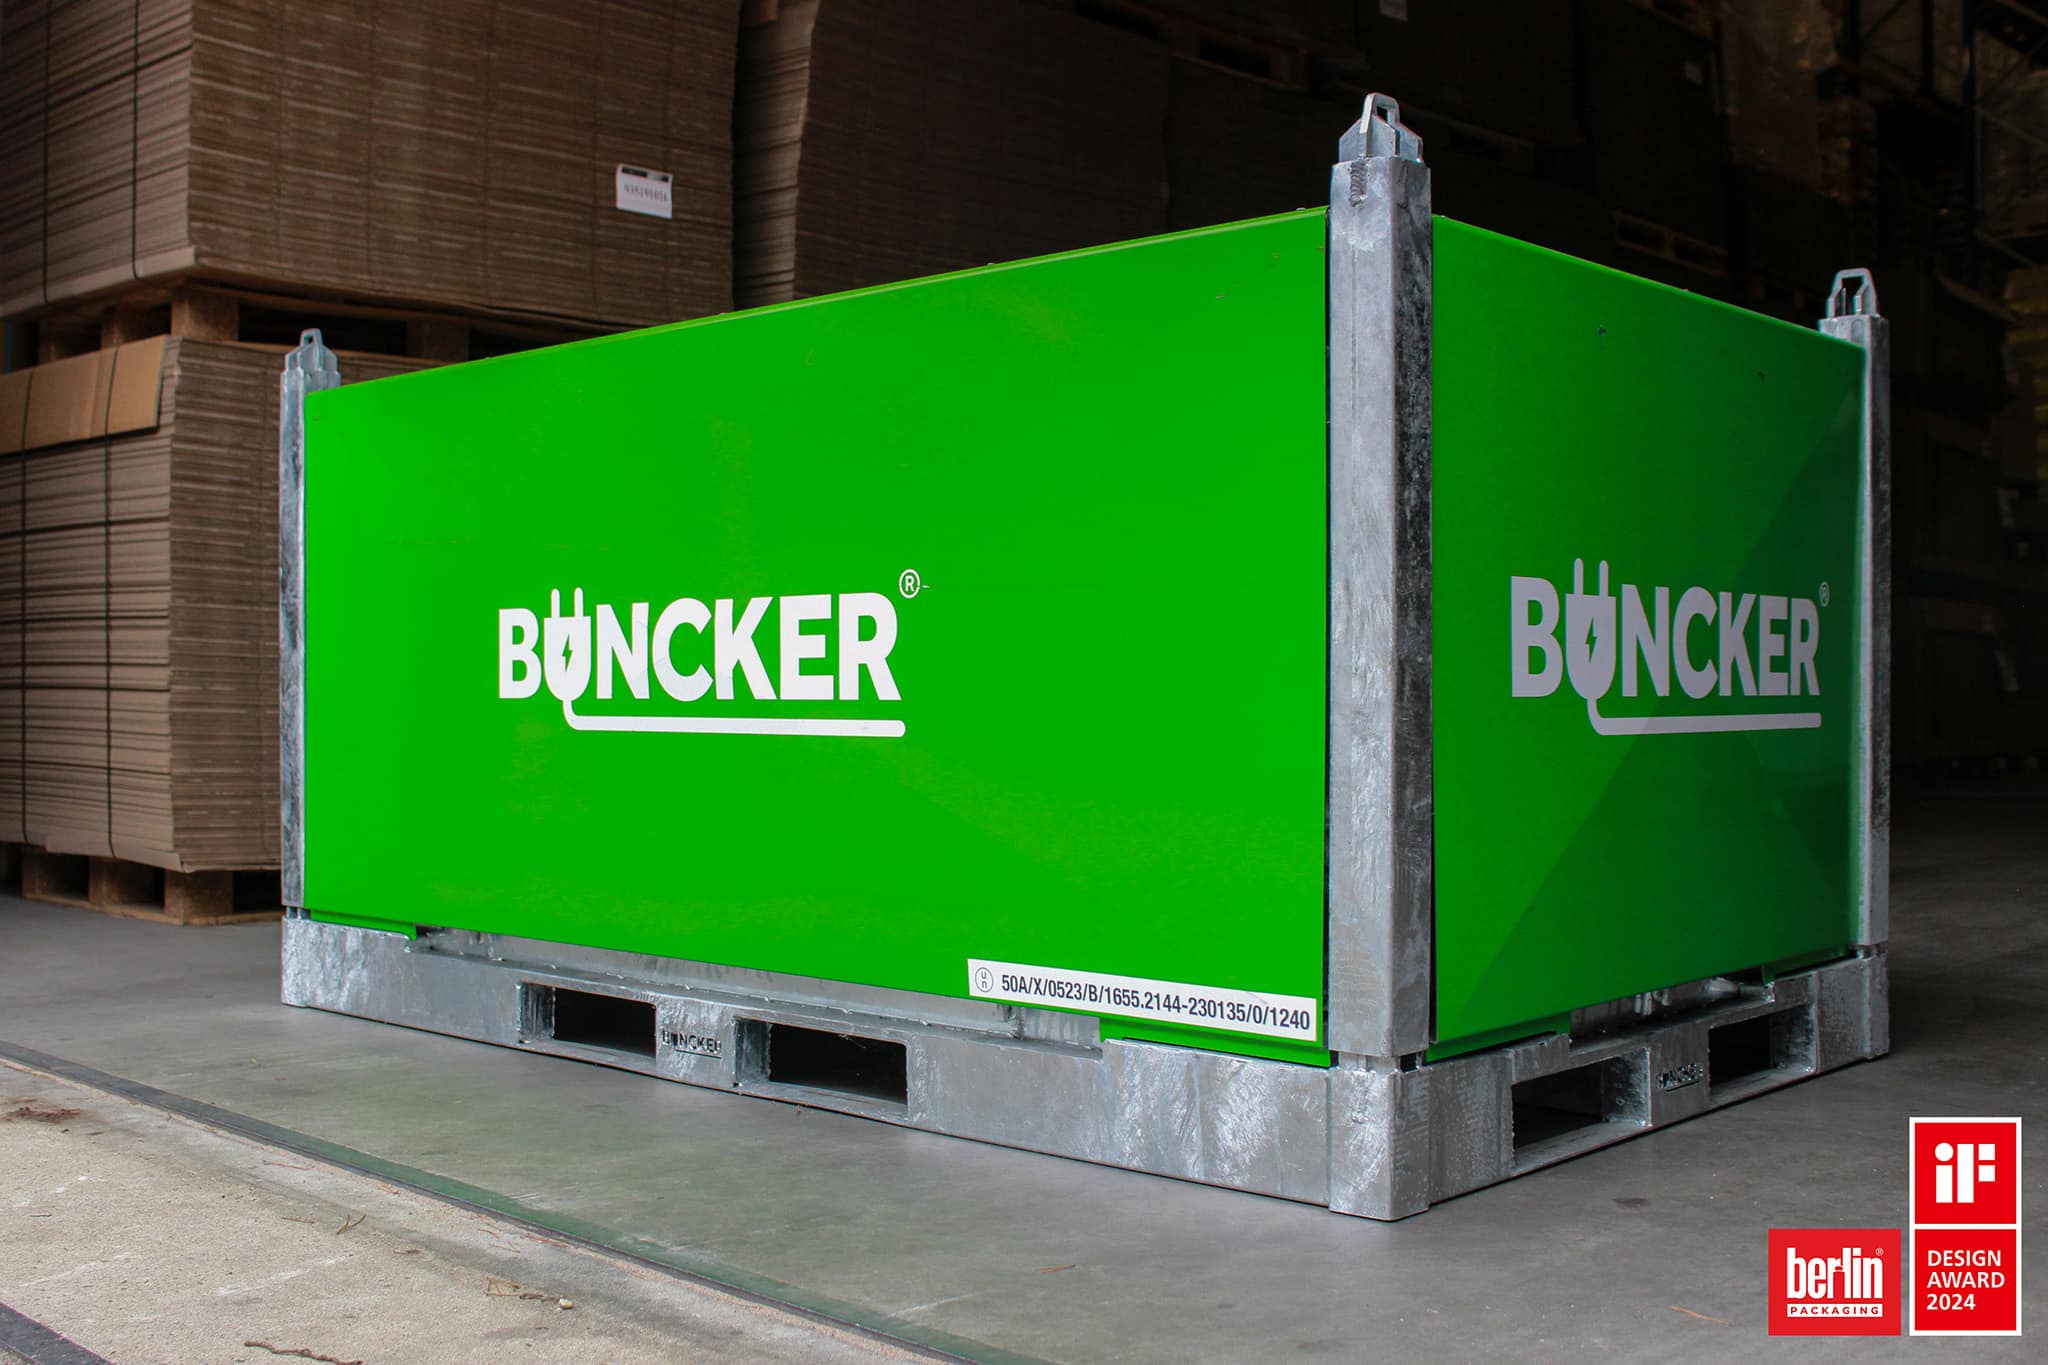 Buncker Picture 1 IF Design Berlin Packaging web News